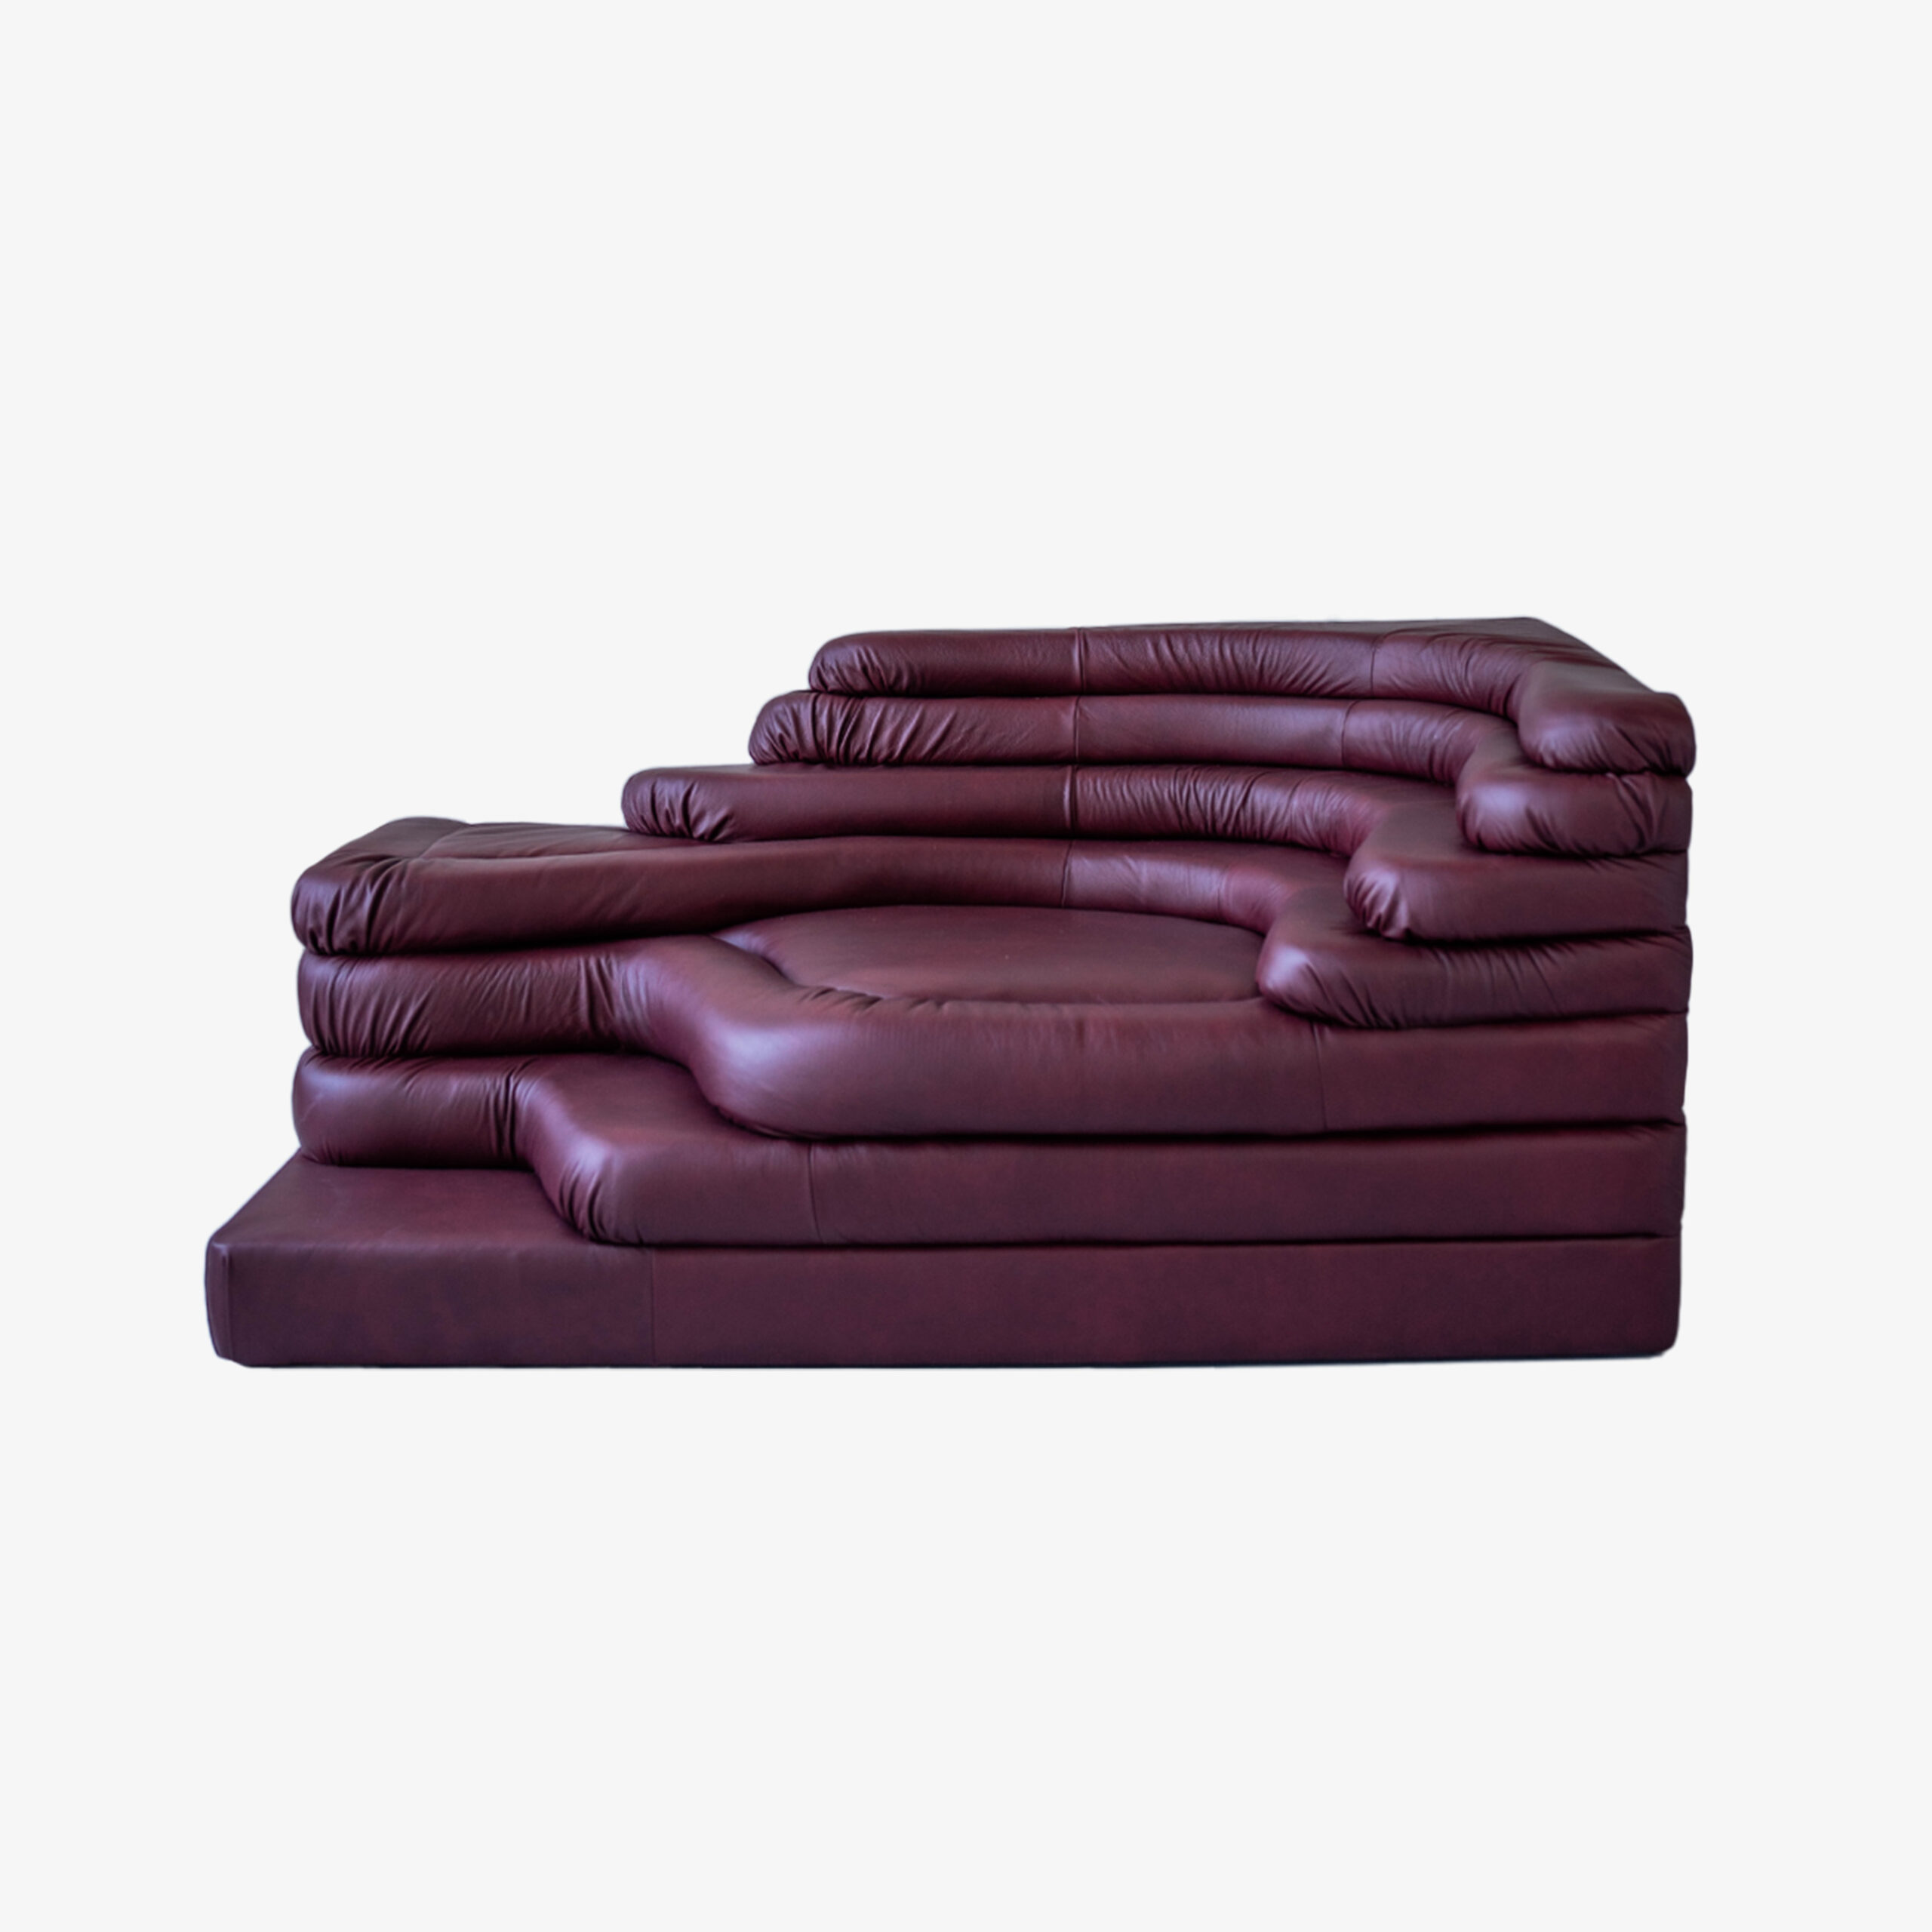 Burgundy Leather DS-1025 Terrazza Sofa by Ubald Klug for de Sede